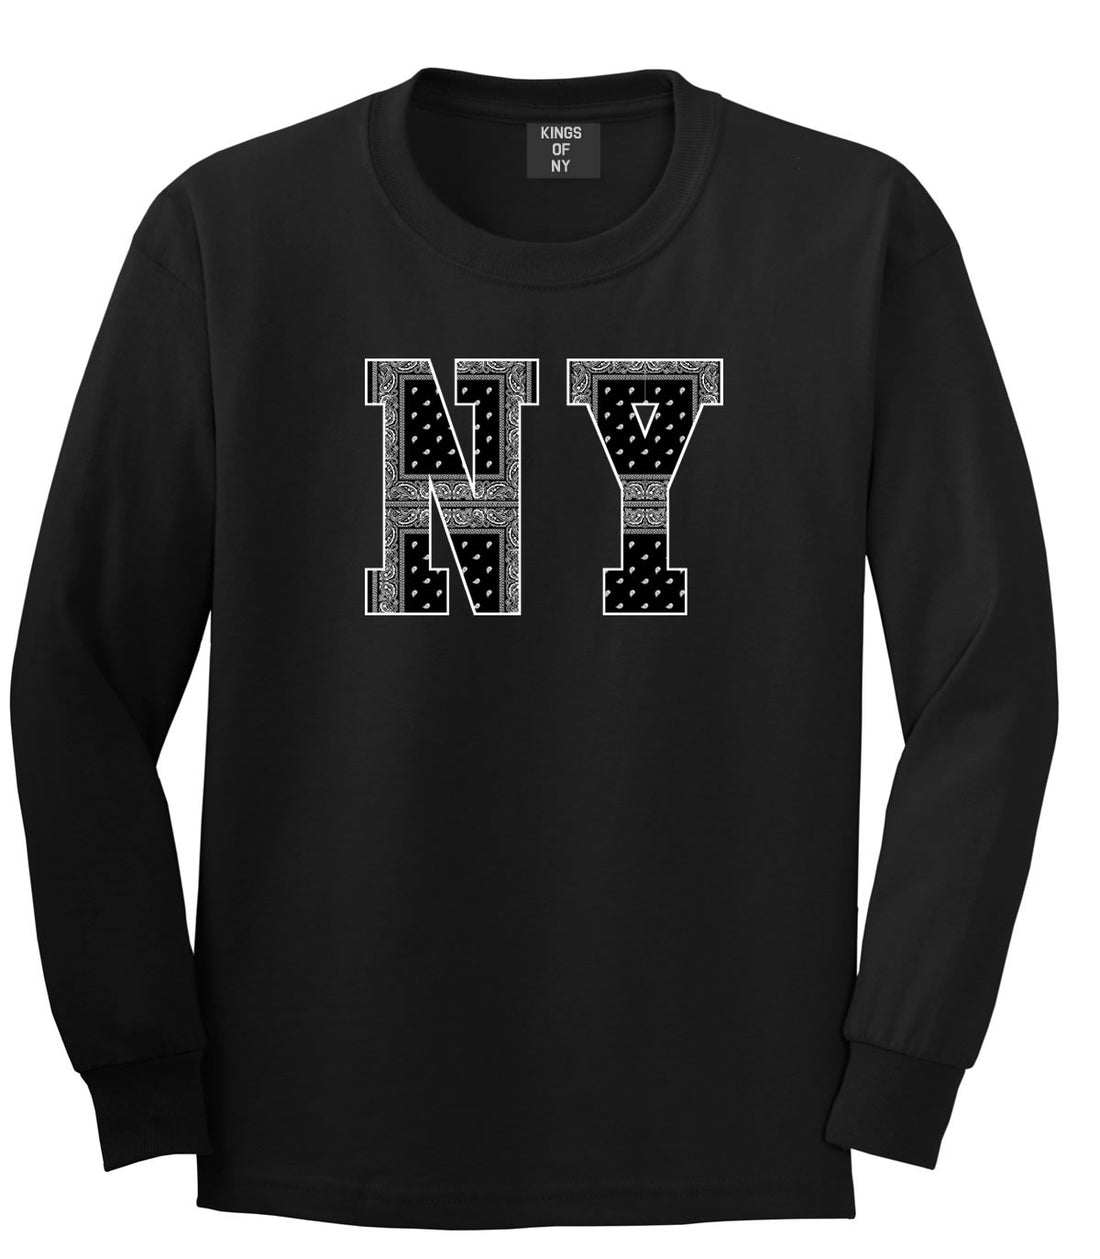 New York Bandana NYC Black by Kings Of NY Gang Flag Long Sleeve Boys Kids T-Shirt In Black by Kings Of NY